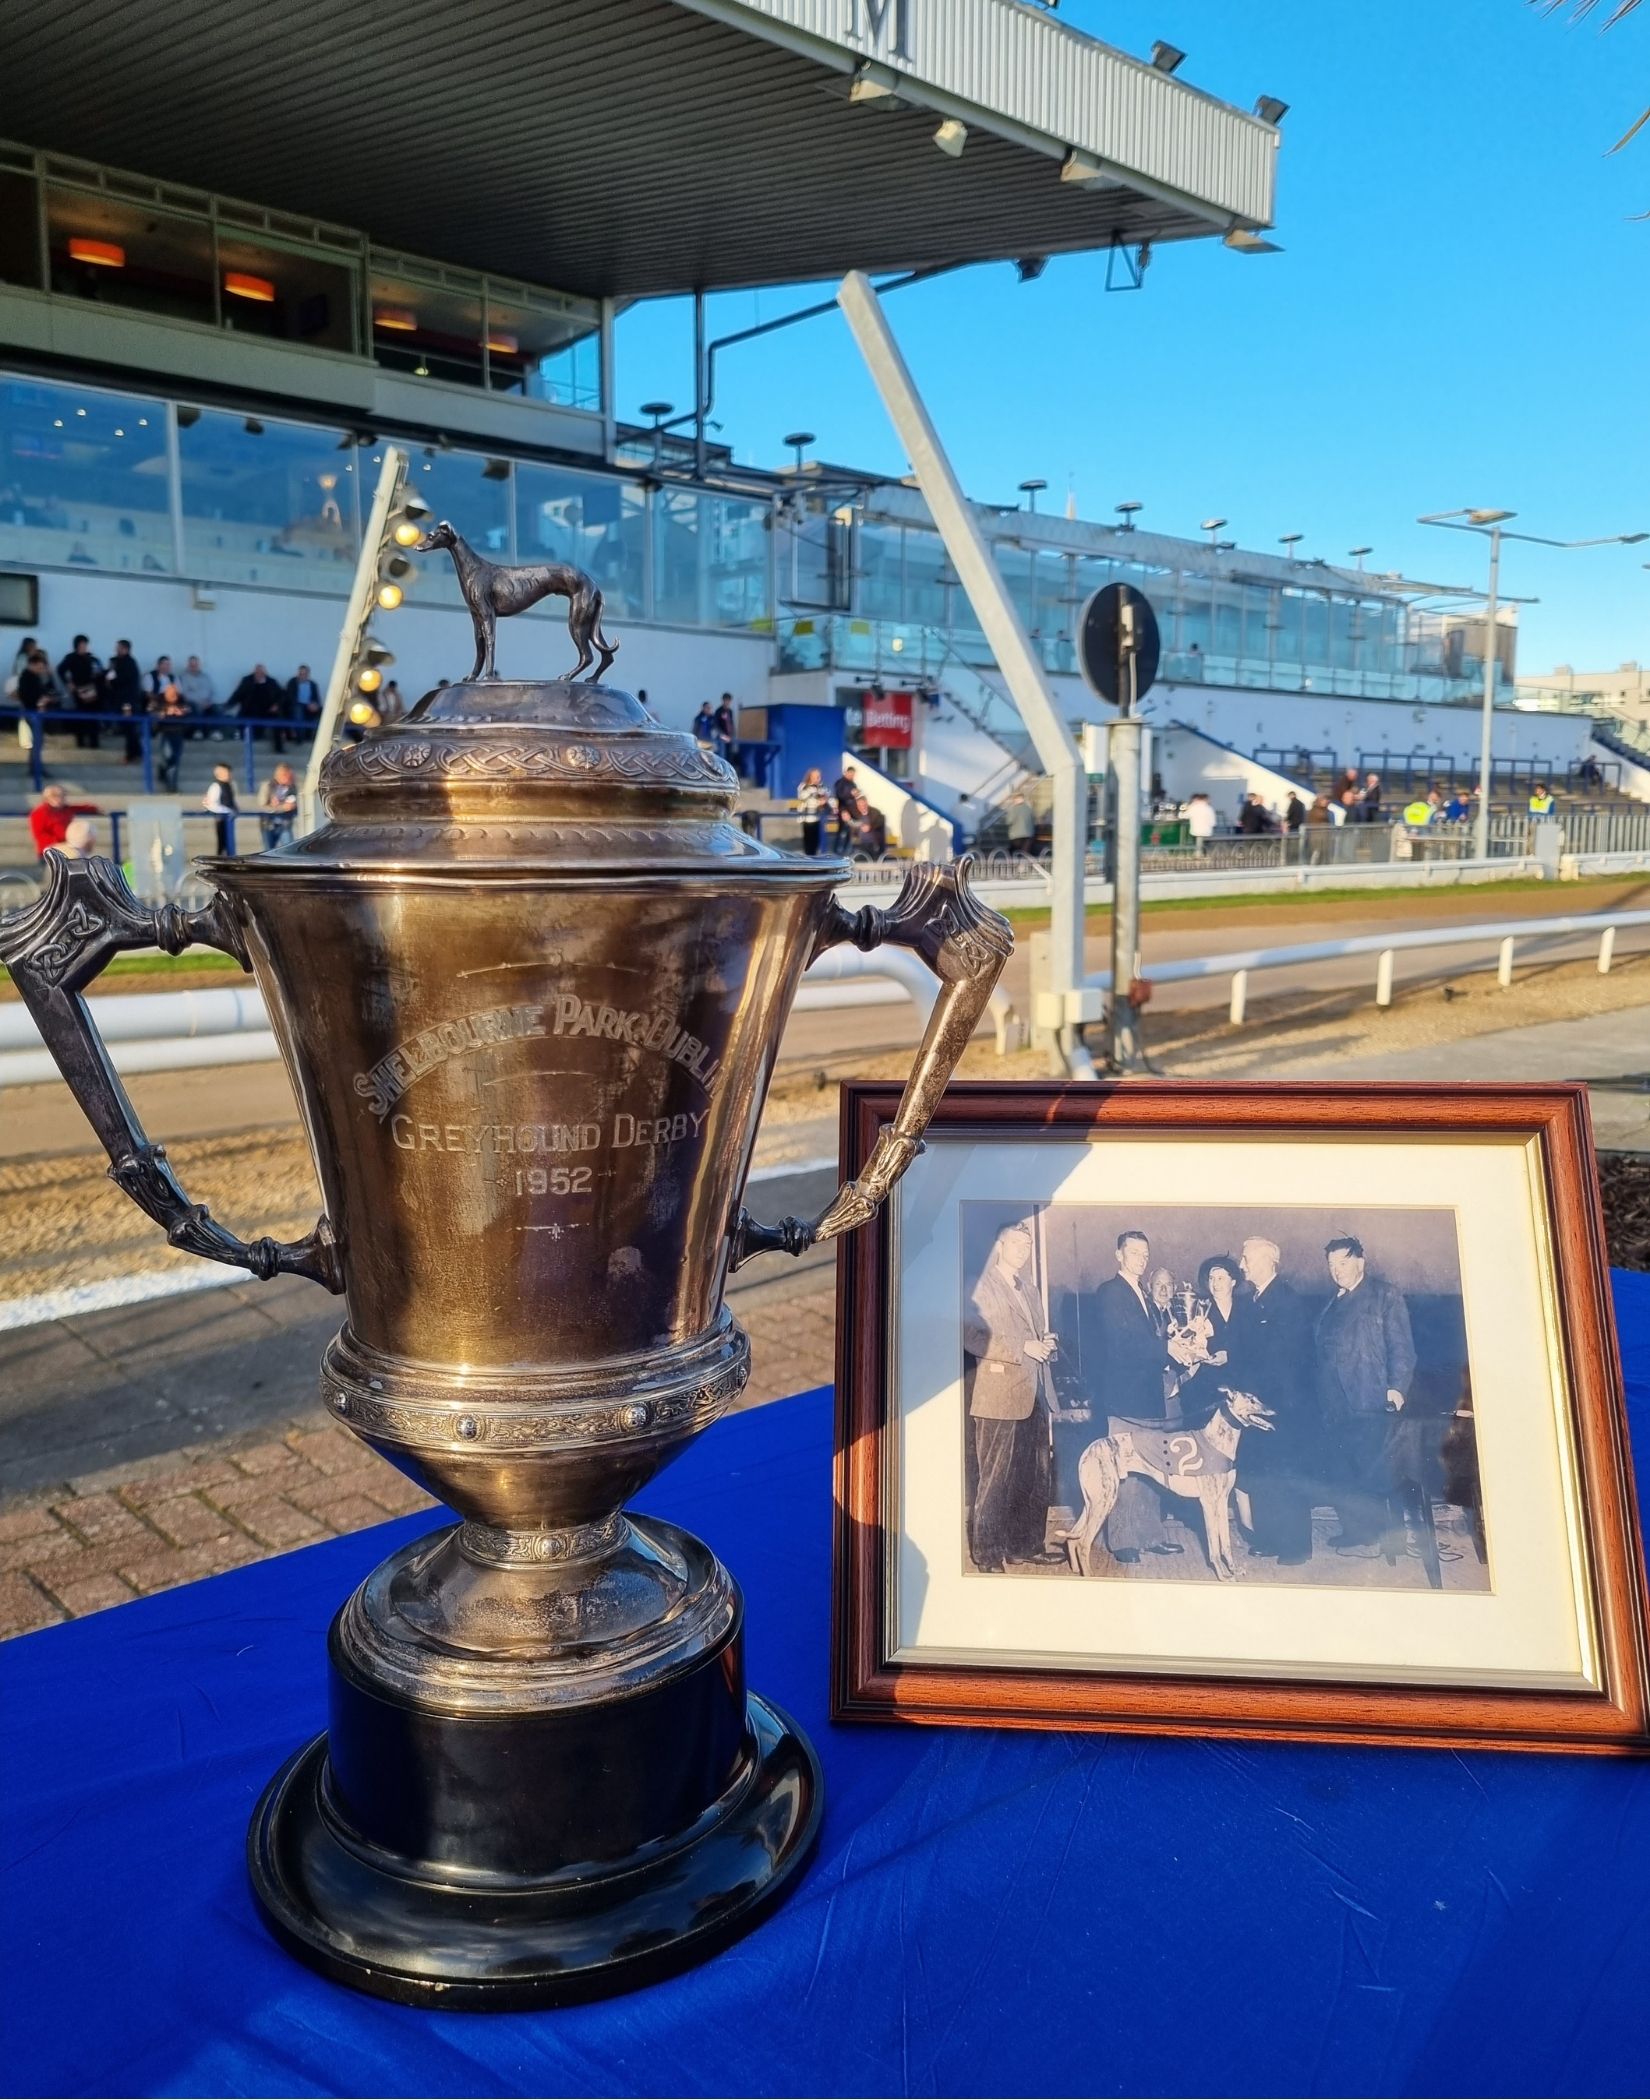 The 1952 Irish Greyhound Derby Trophy and Presentation Photo